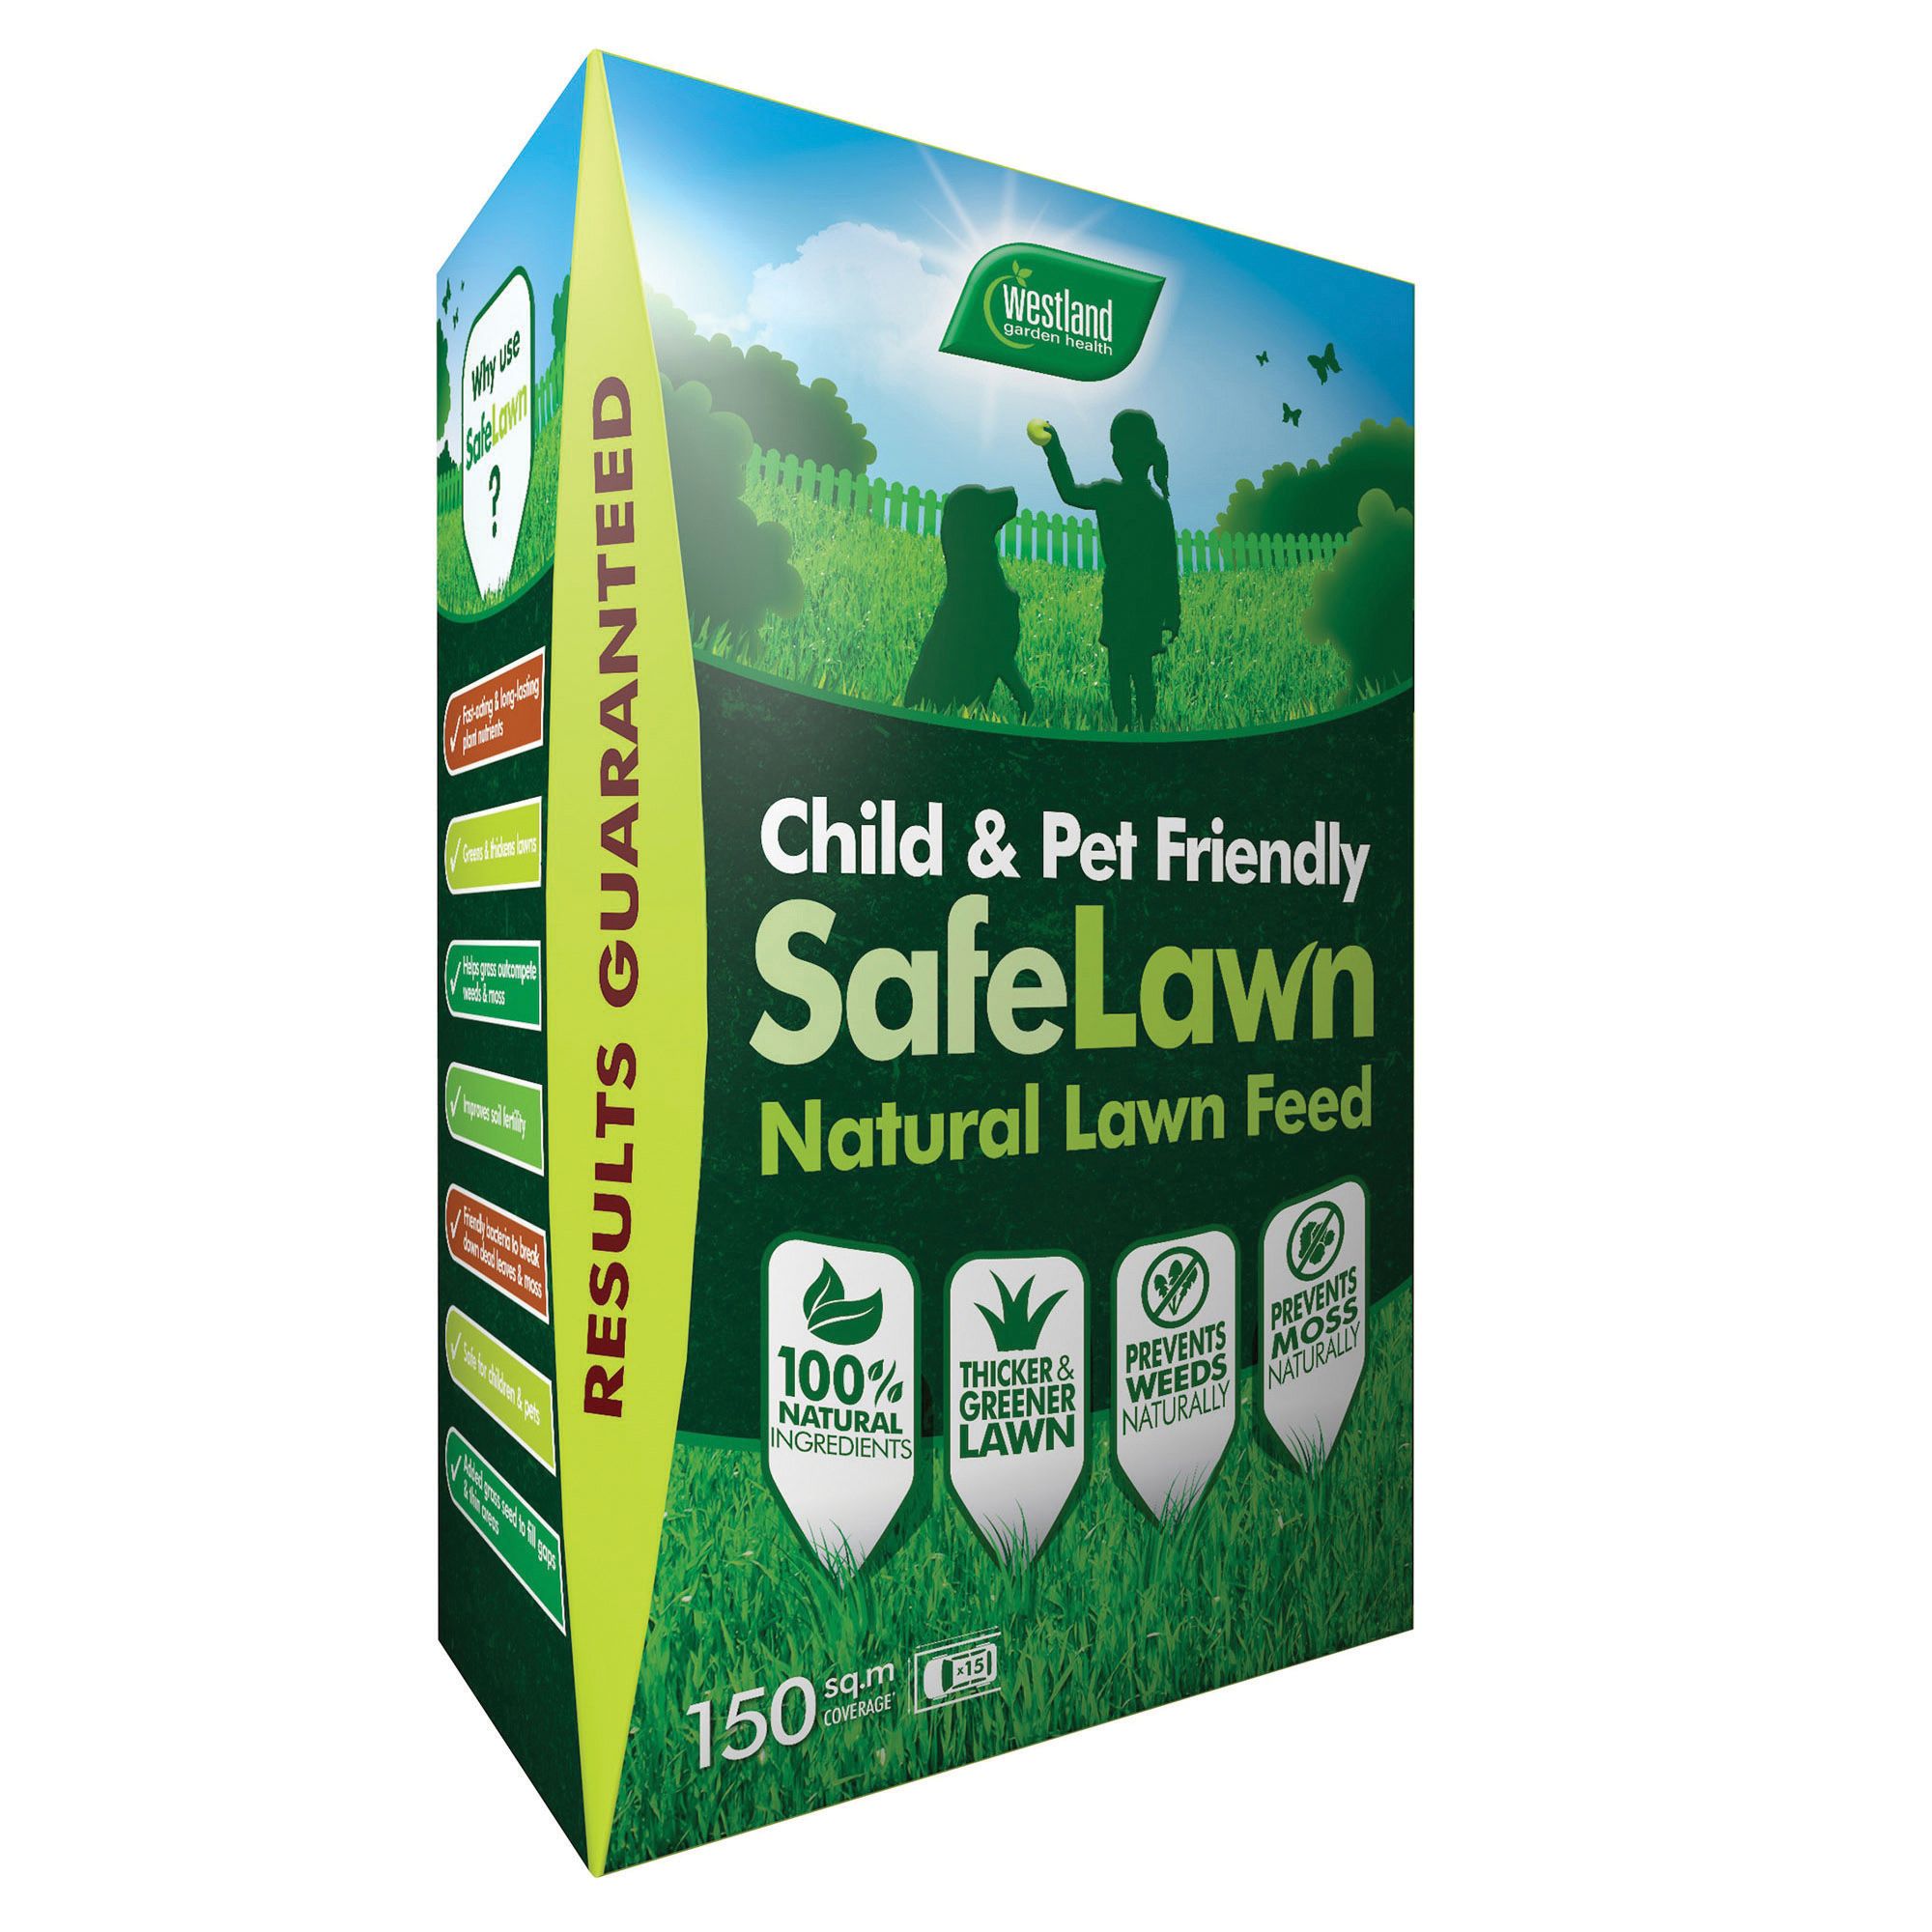 Image of Westland Safe Lawn Green Organic Fertiliser Box - 150m² - 5.25kg